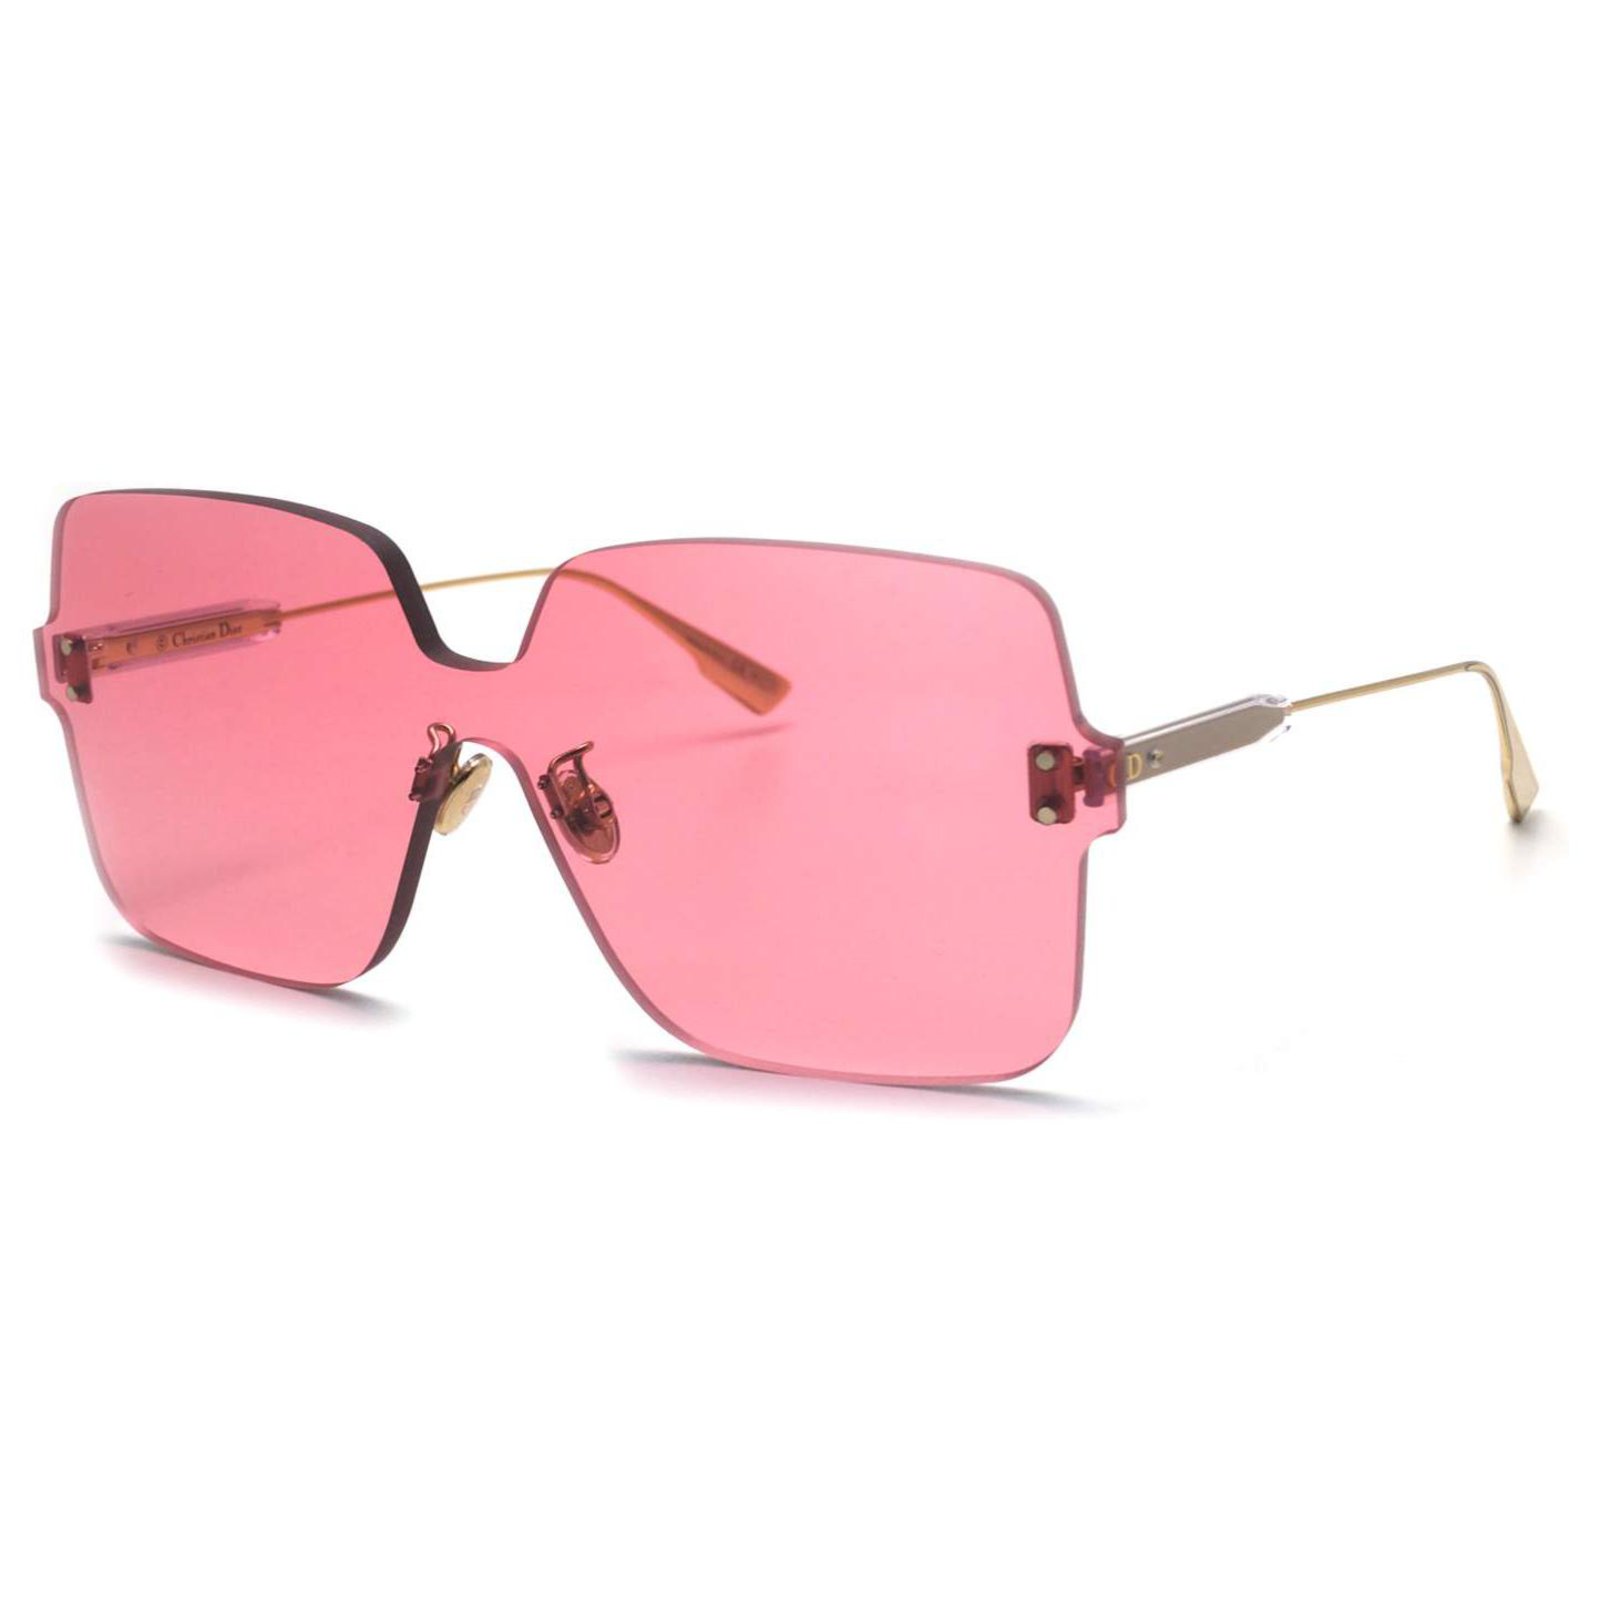 DIOR optical frames for woman  Pink  Dior optical frames MINI CD O S6I  online on GIGLIOCOM